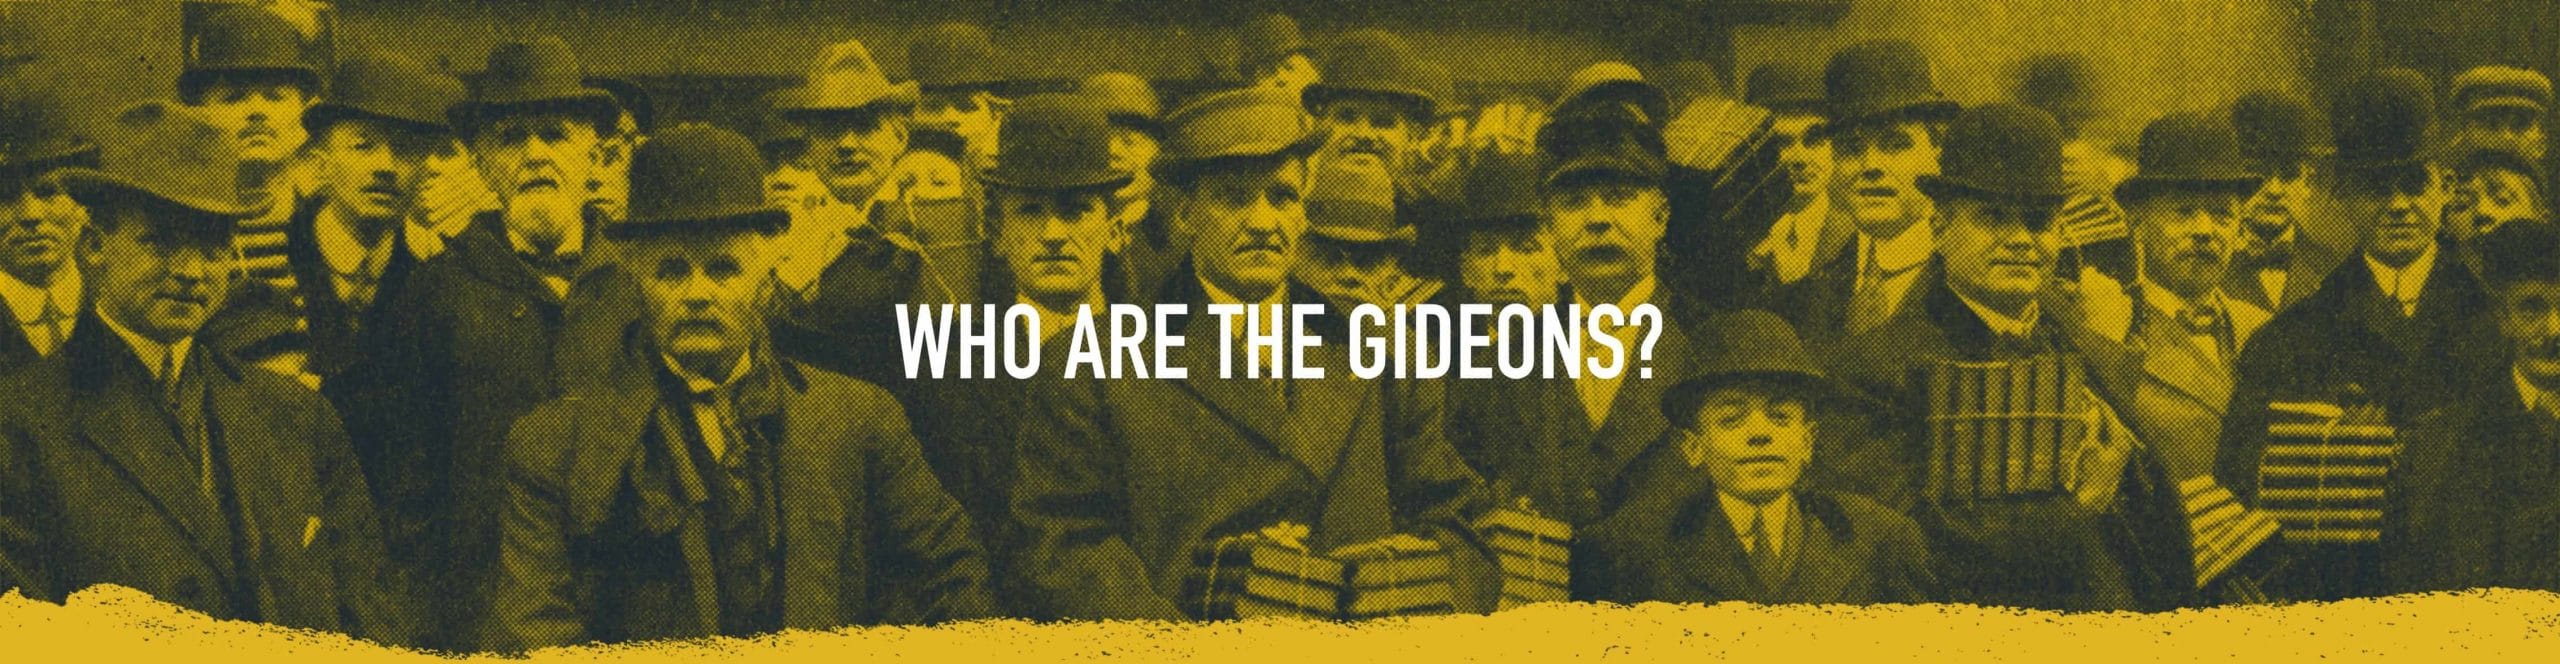 the gideons